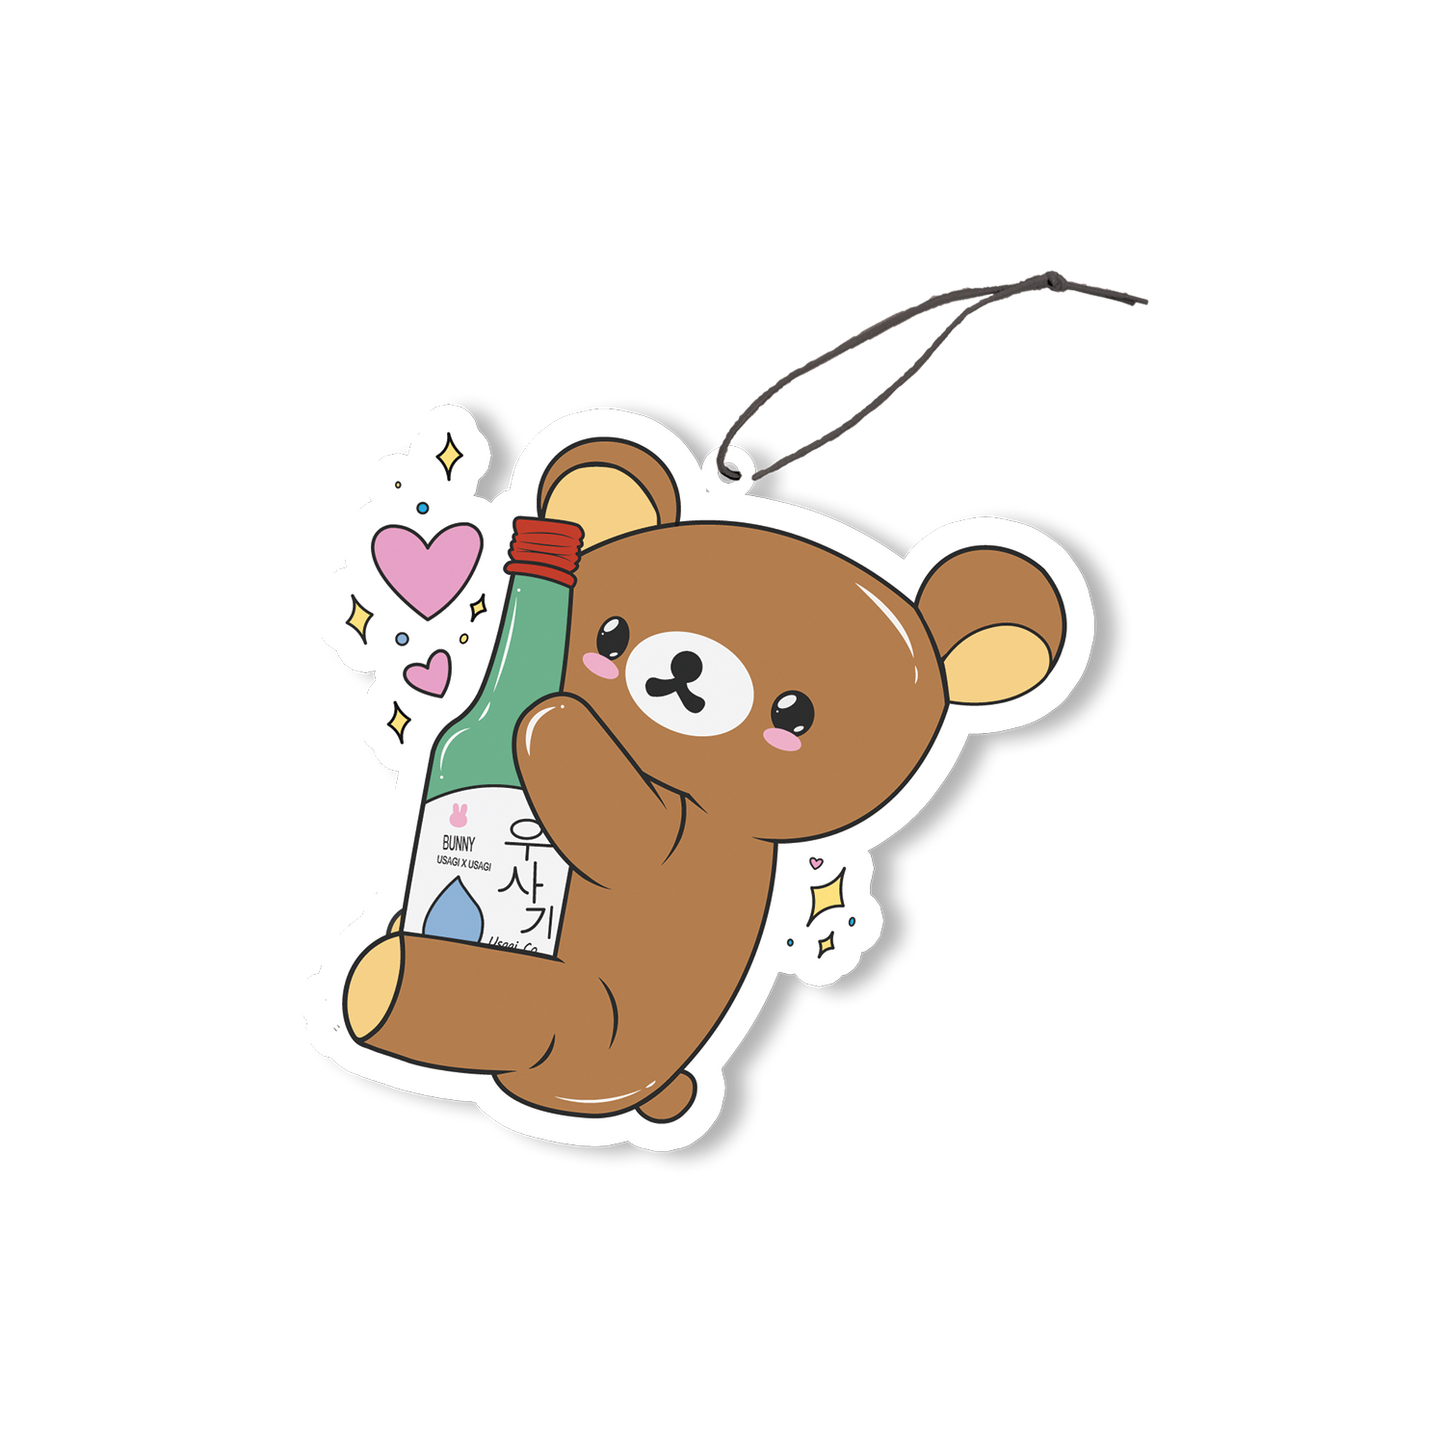 Soju Kuma Air Freshener design features brown bear holding a soju bottle.